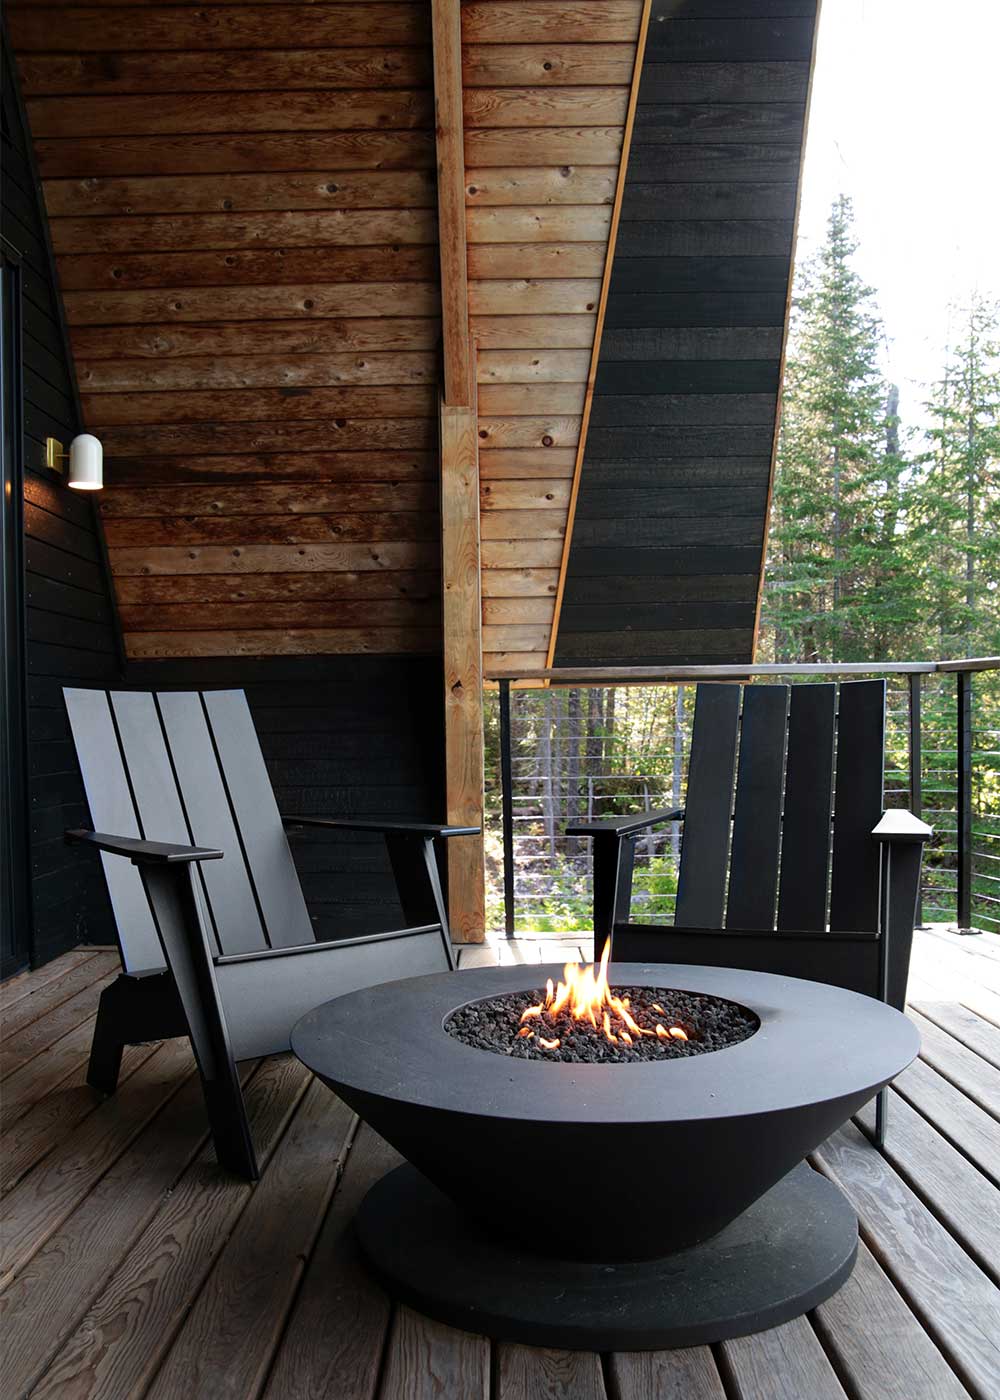 The Minne Stuga cabin outdoor furniture